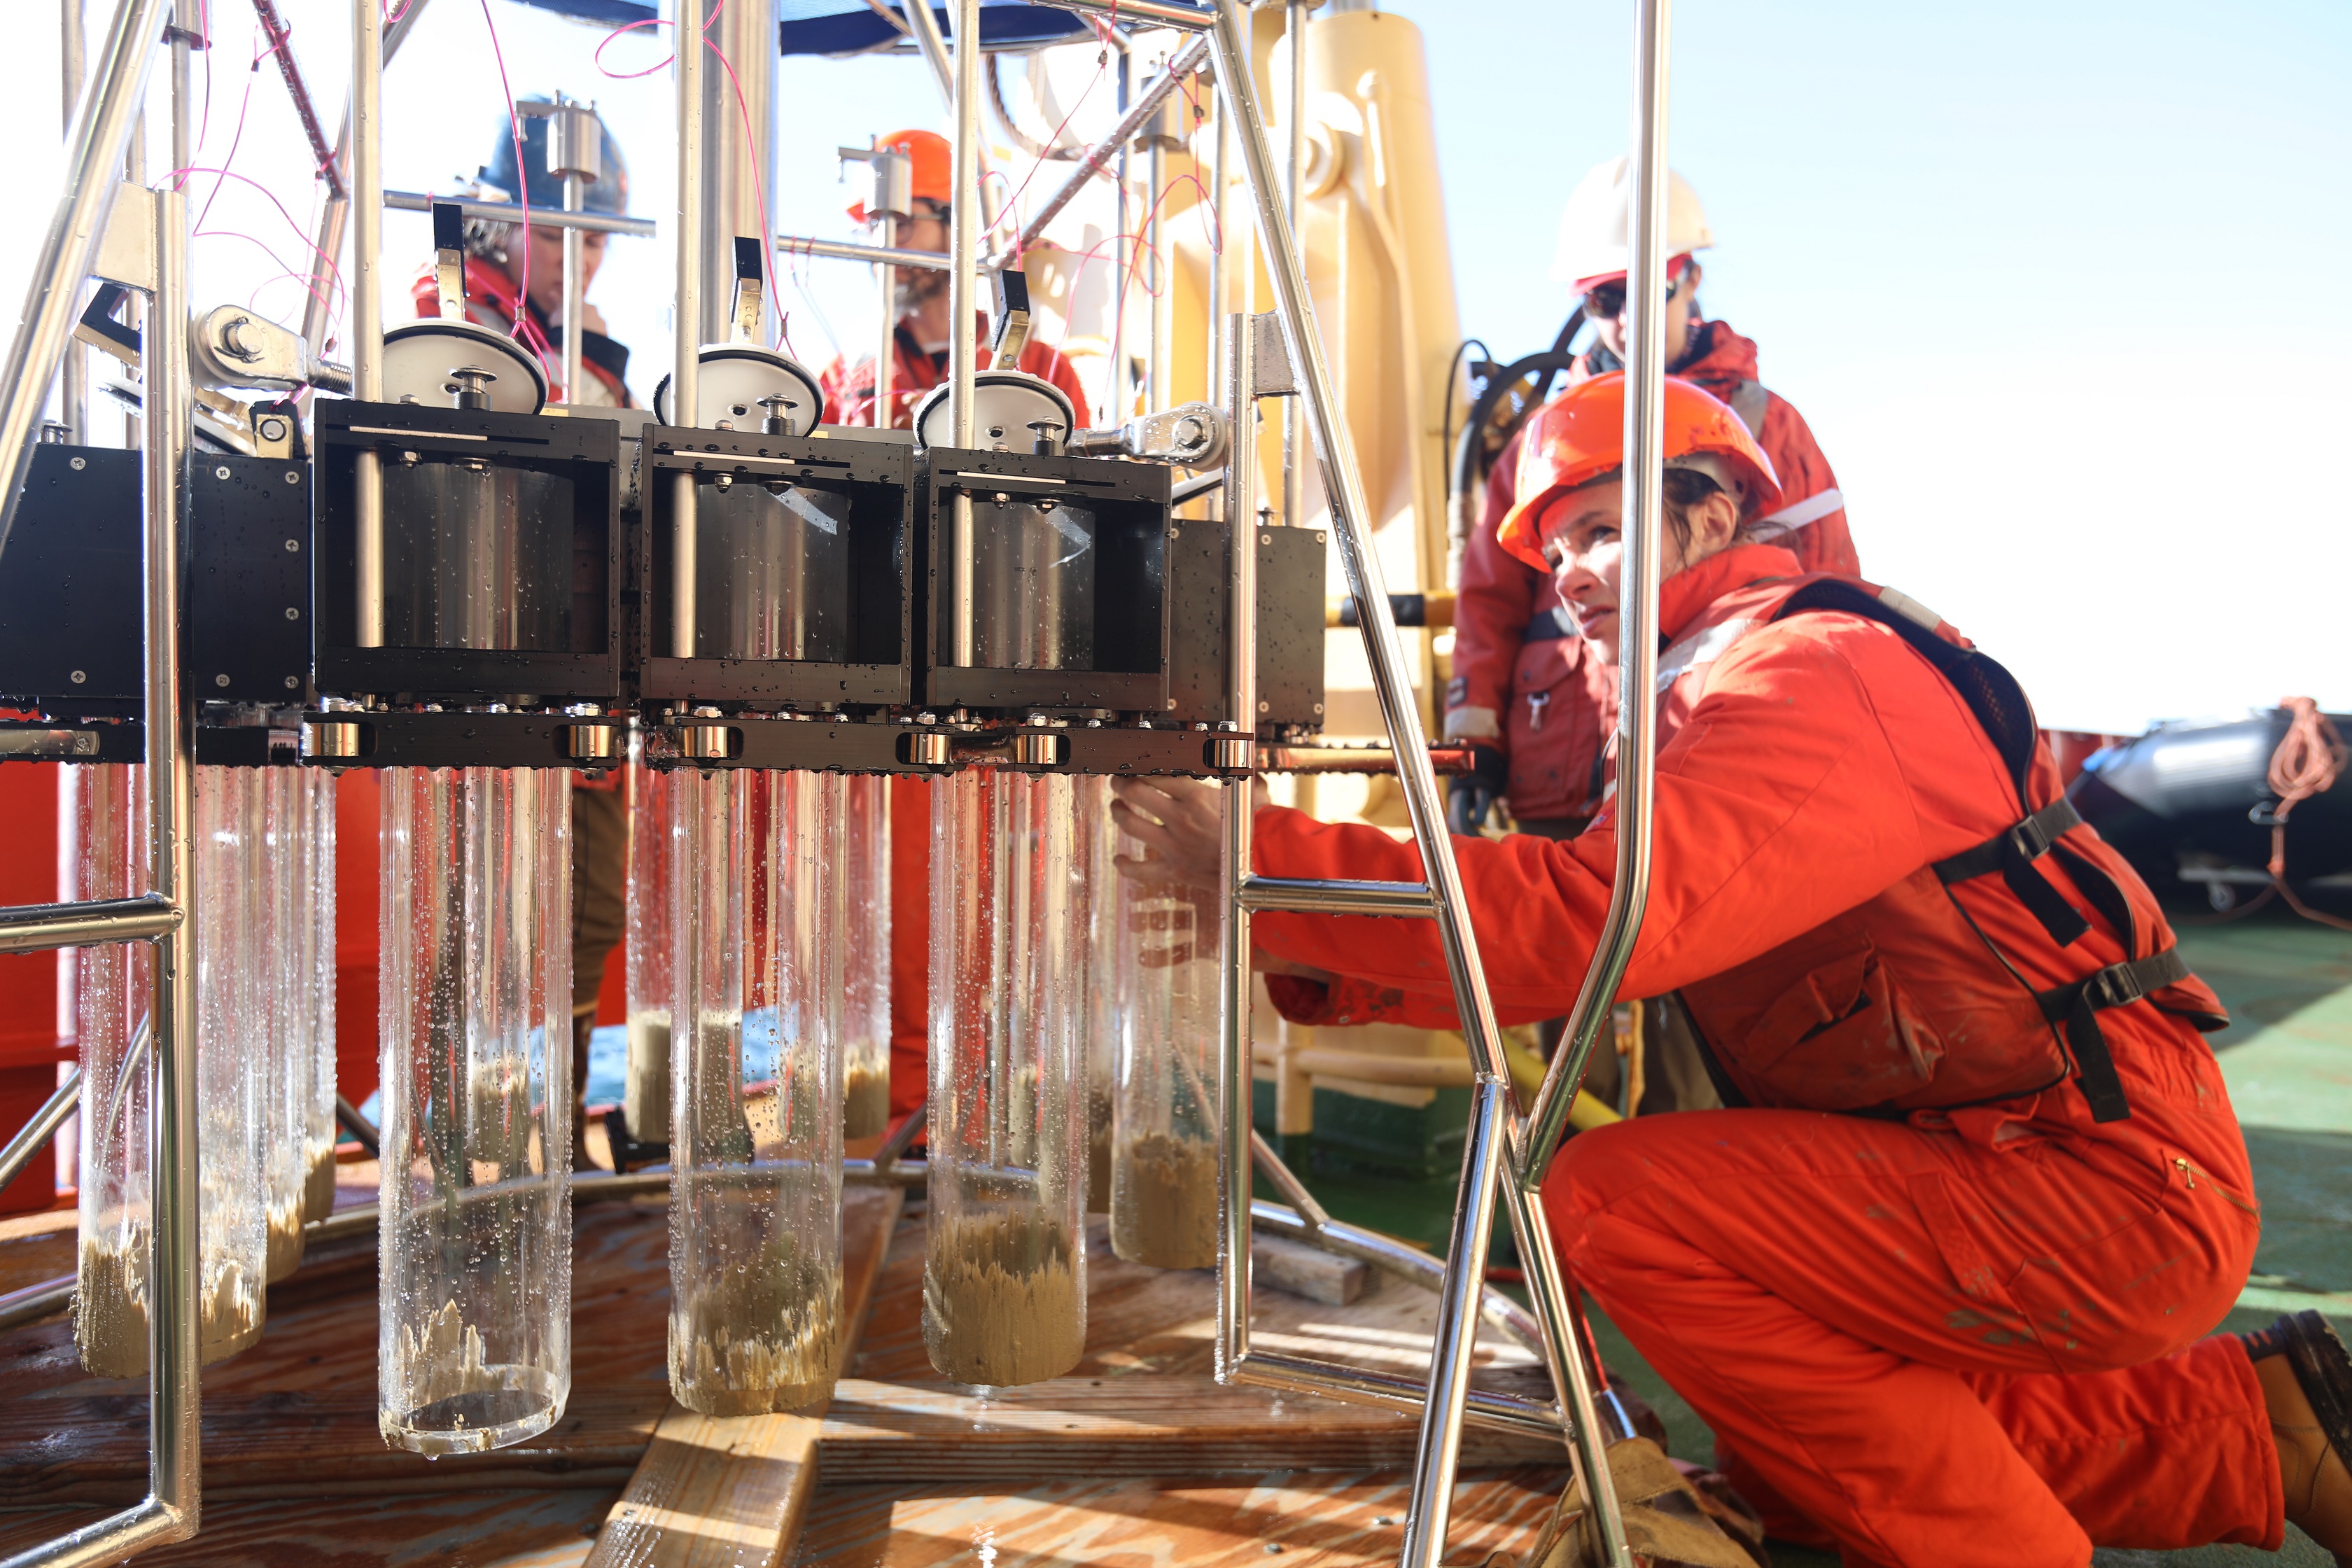 Researchers prepare the corer for sediment collection. Credit Linda Welzenbach